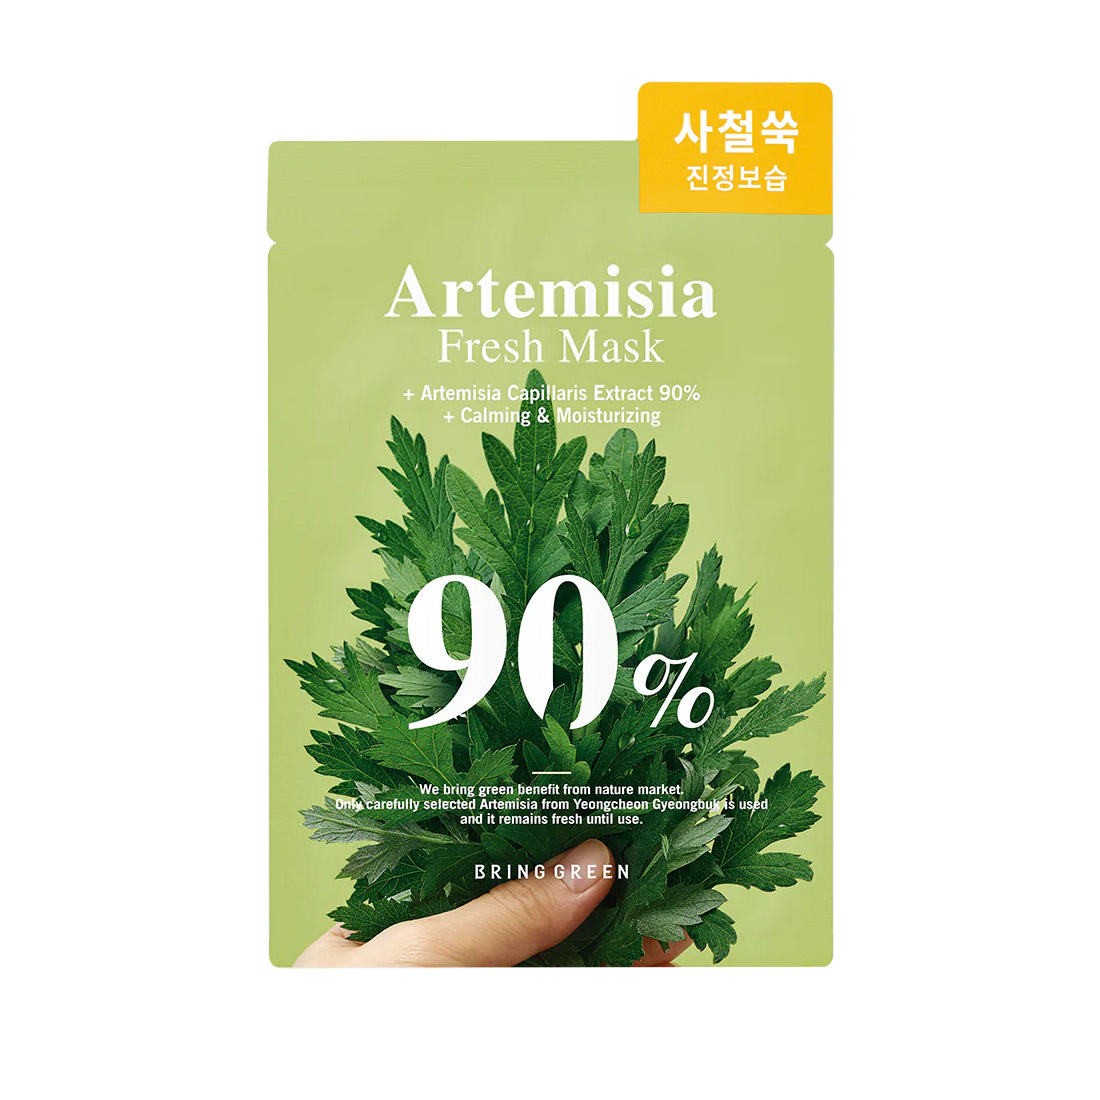 Bring Green Artemisia 90% Fresh Mask Beauty Bring Green 1 sheet  